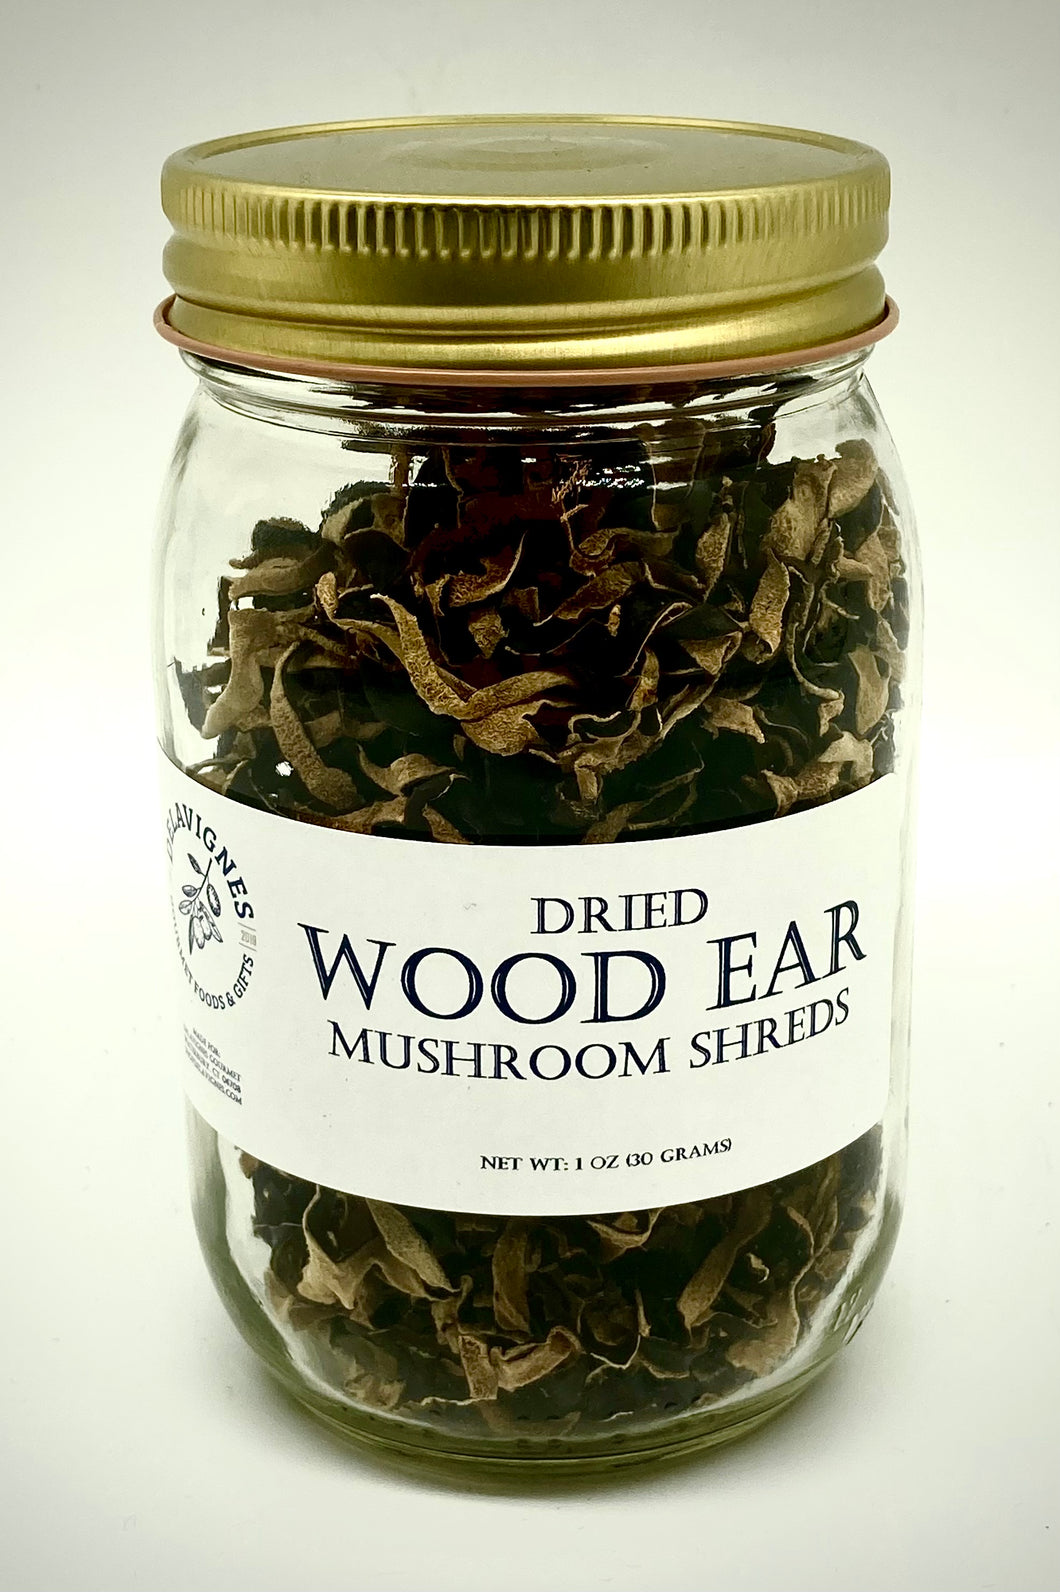 Delavignes Dried Wood Ear Mushrooms - 1oz